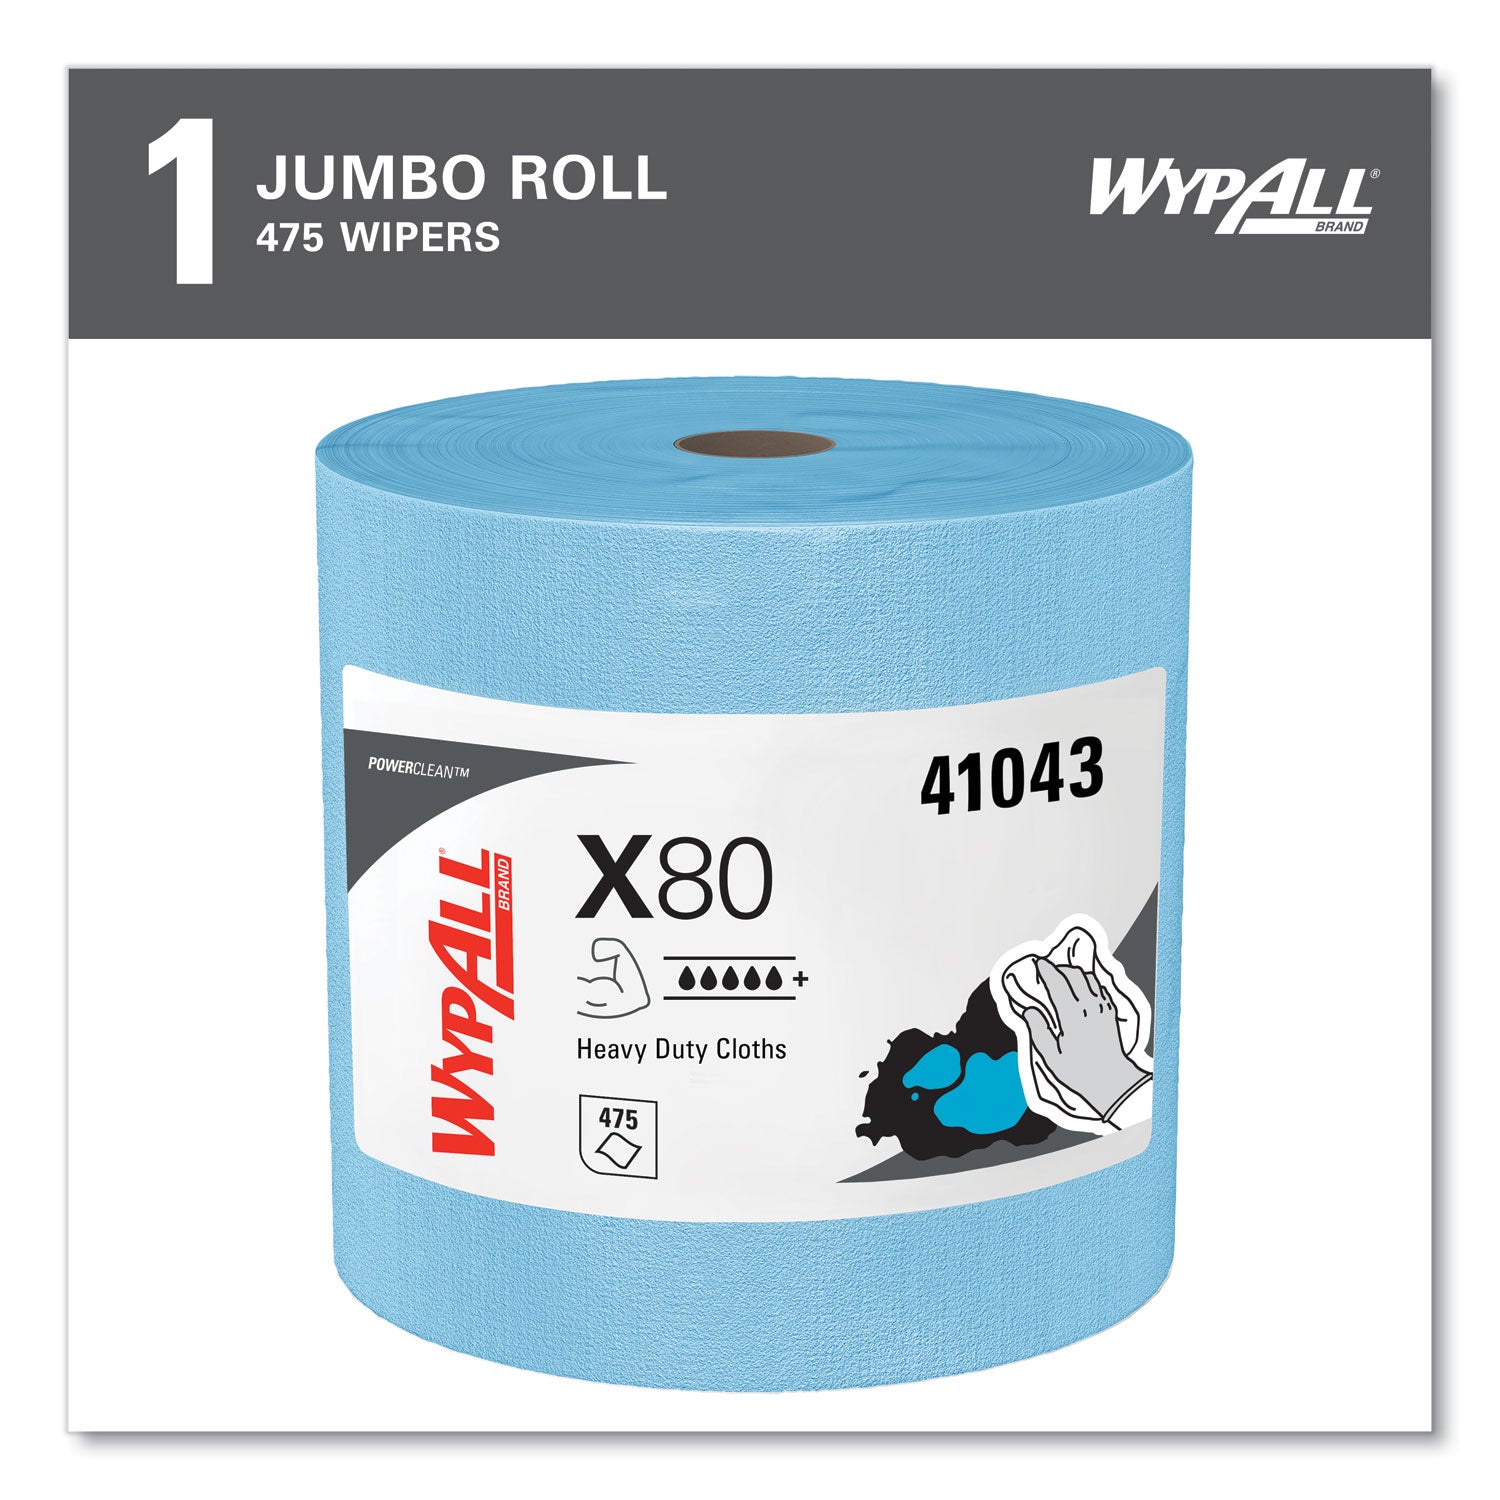 power-clean-x80-heavy-duty-cloths-jumbo-roll-124-x-122-blue-475-roll_kcc41043 - 2